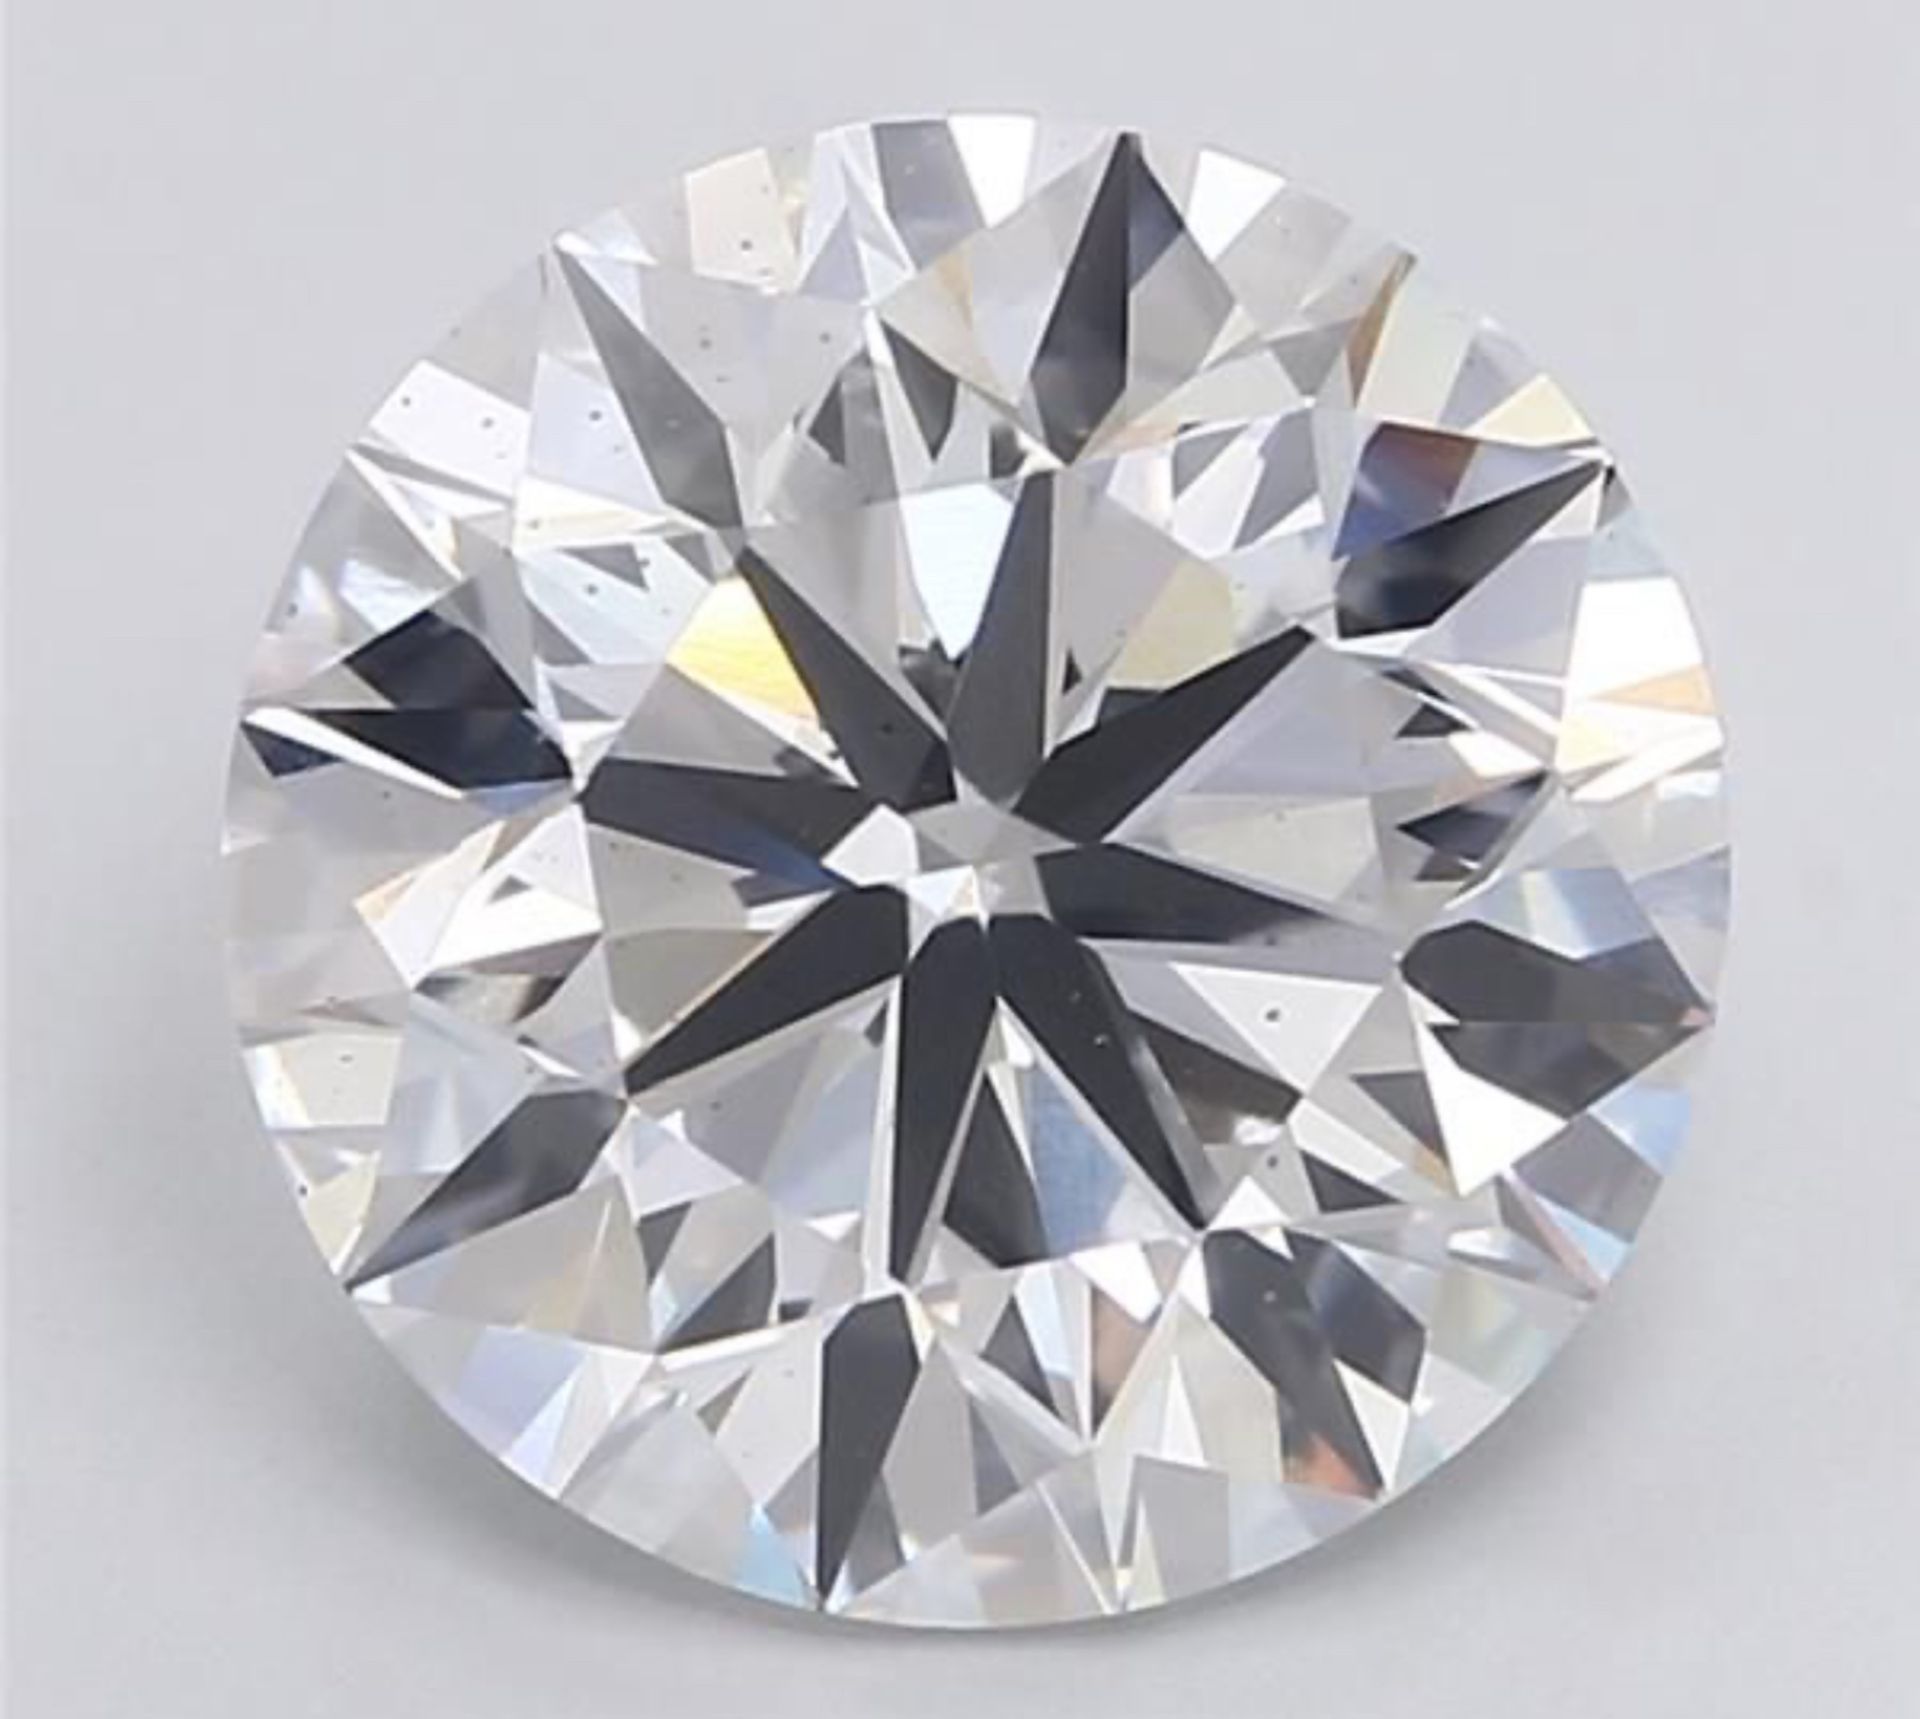 ** ON SALE ** Round Brilliant Cut Diamond 1.00 Carat D Colour VVS1 Clarity - IGI Certificate - Image 6 of 7